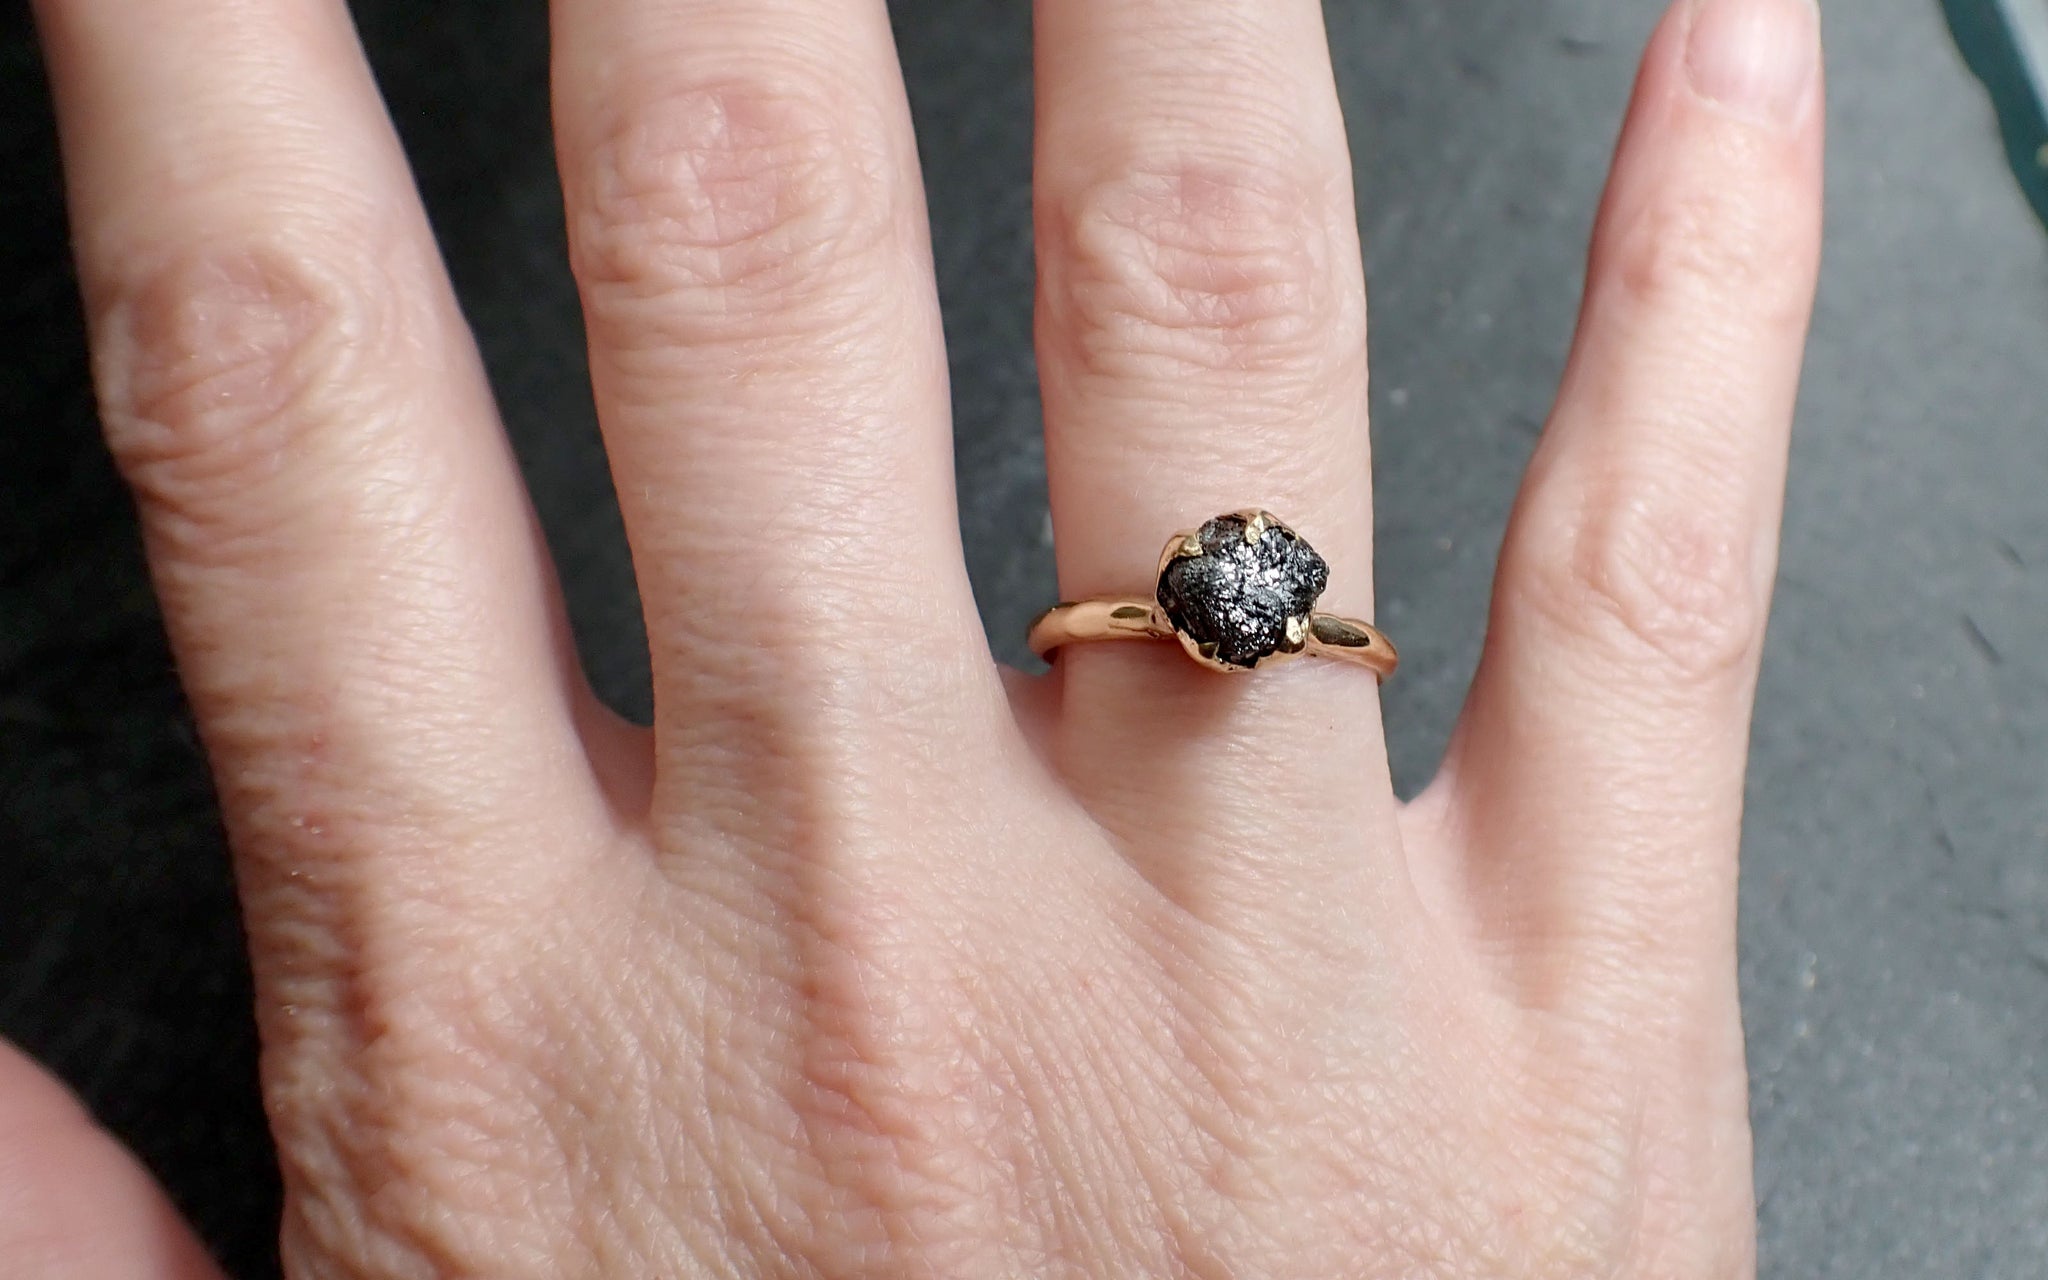 Raw black Diamond Solitaire Engagement Ring Rough Uncut gemstone Yellow gold Conflict Free Black Diamond Wedding Promise 2559